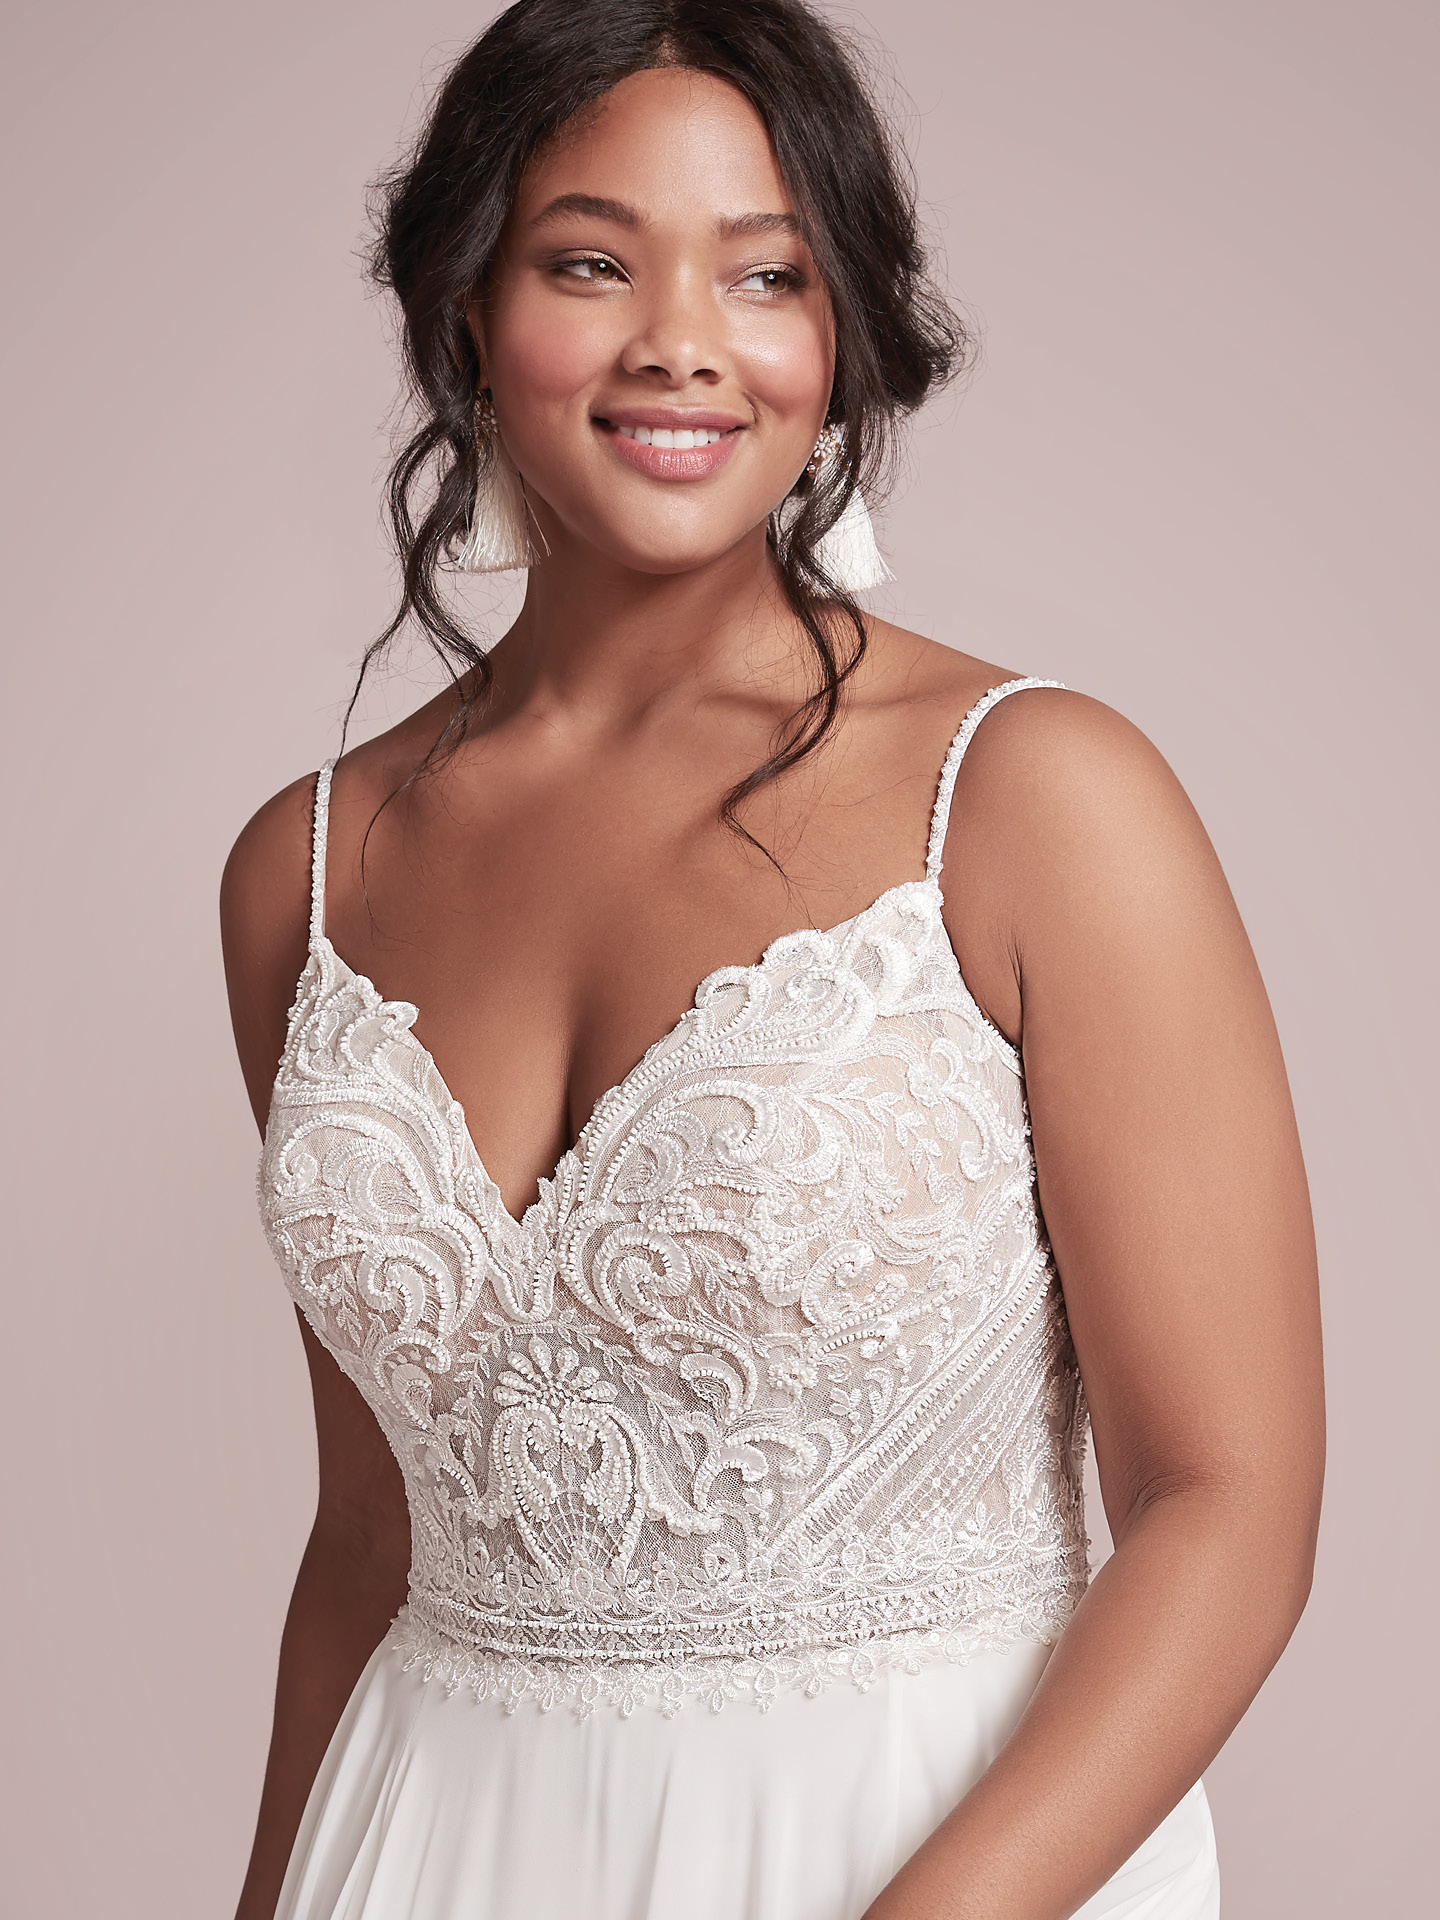 Plus Size Model Wearing Affordable Beach Wedding Dress Called Lorraine by Rebecca Ingram